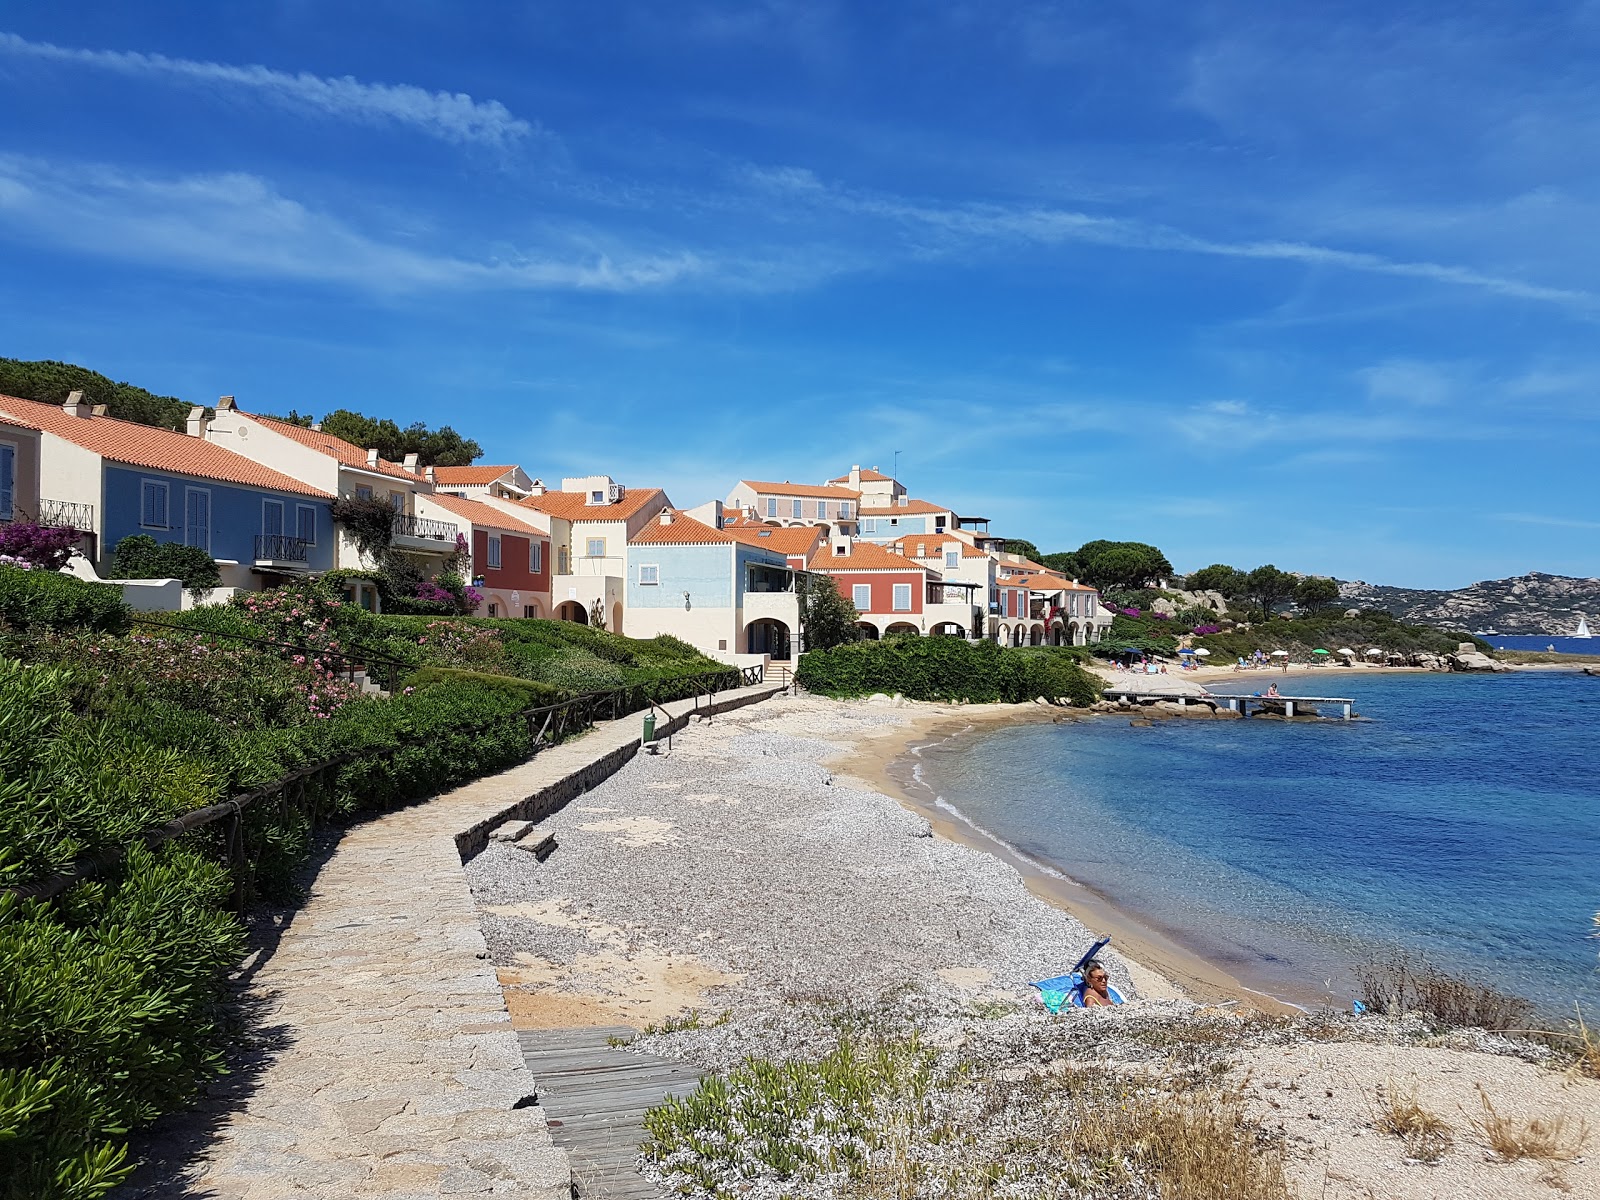 Foto van Spiaggia Porto Faro met hoog niveau van netheid